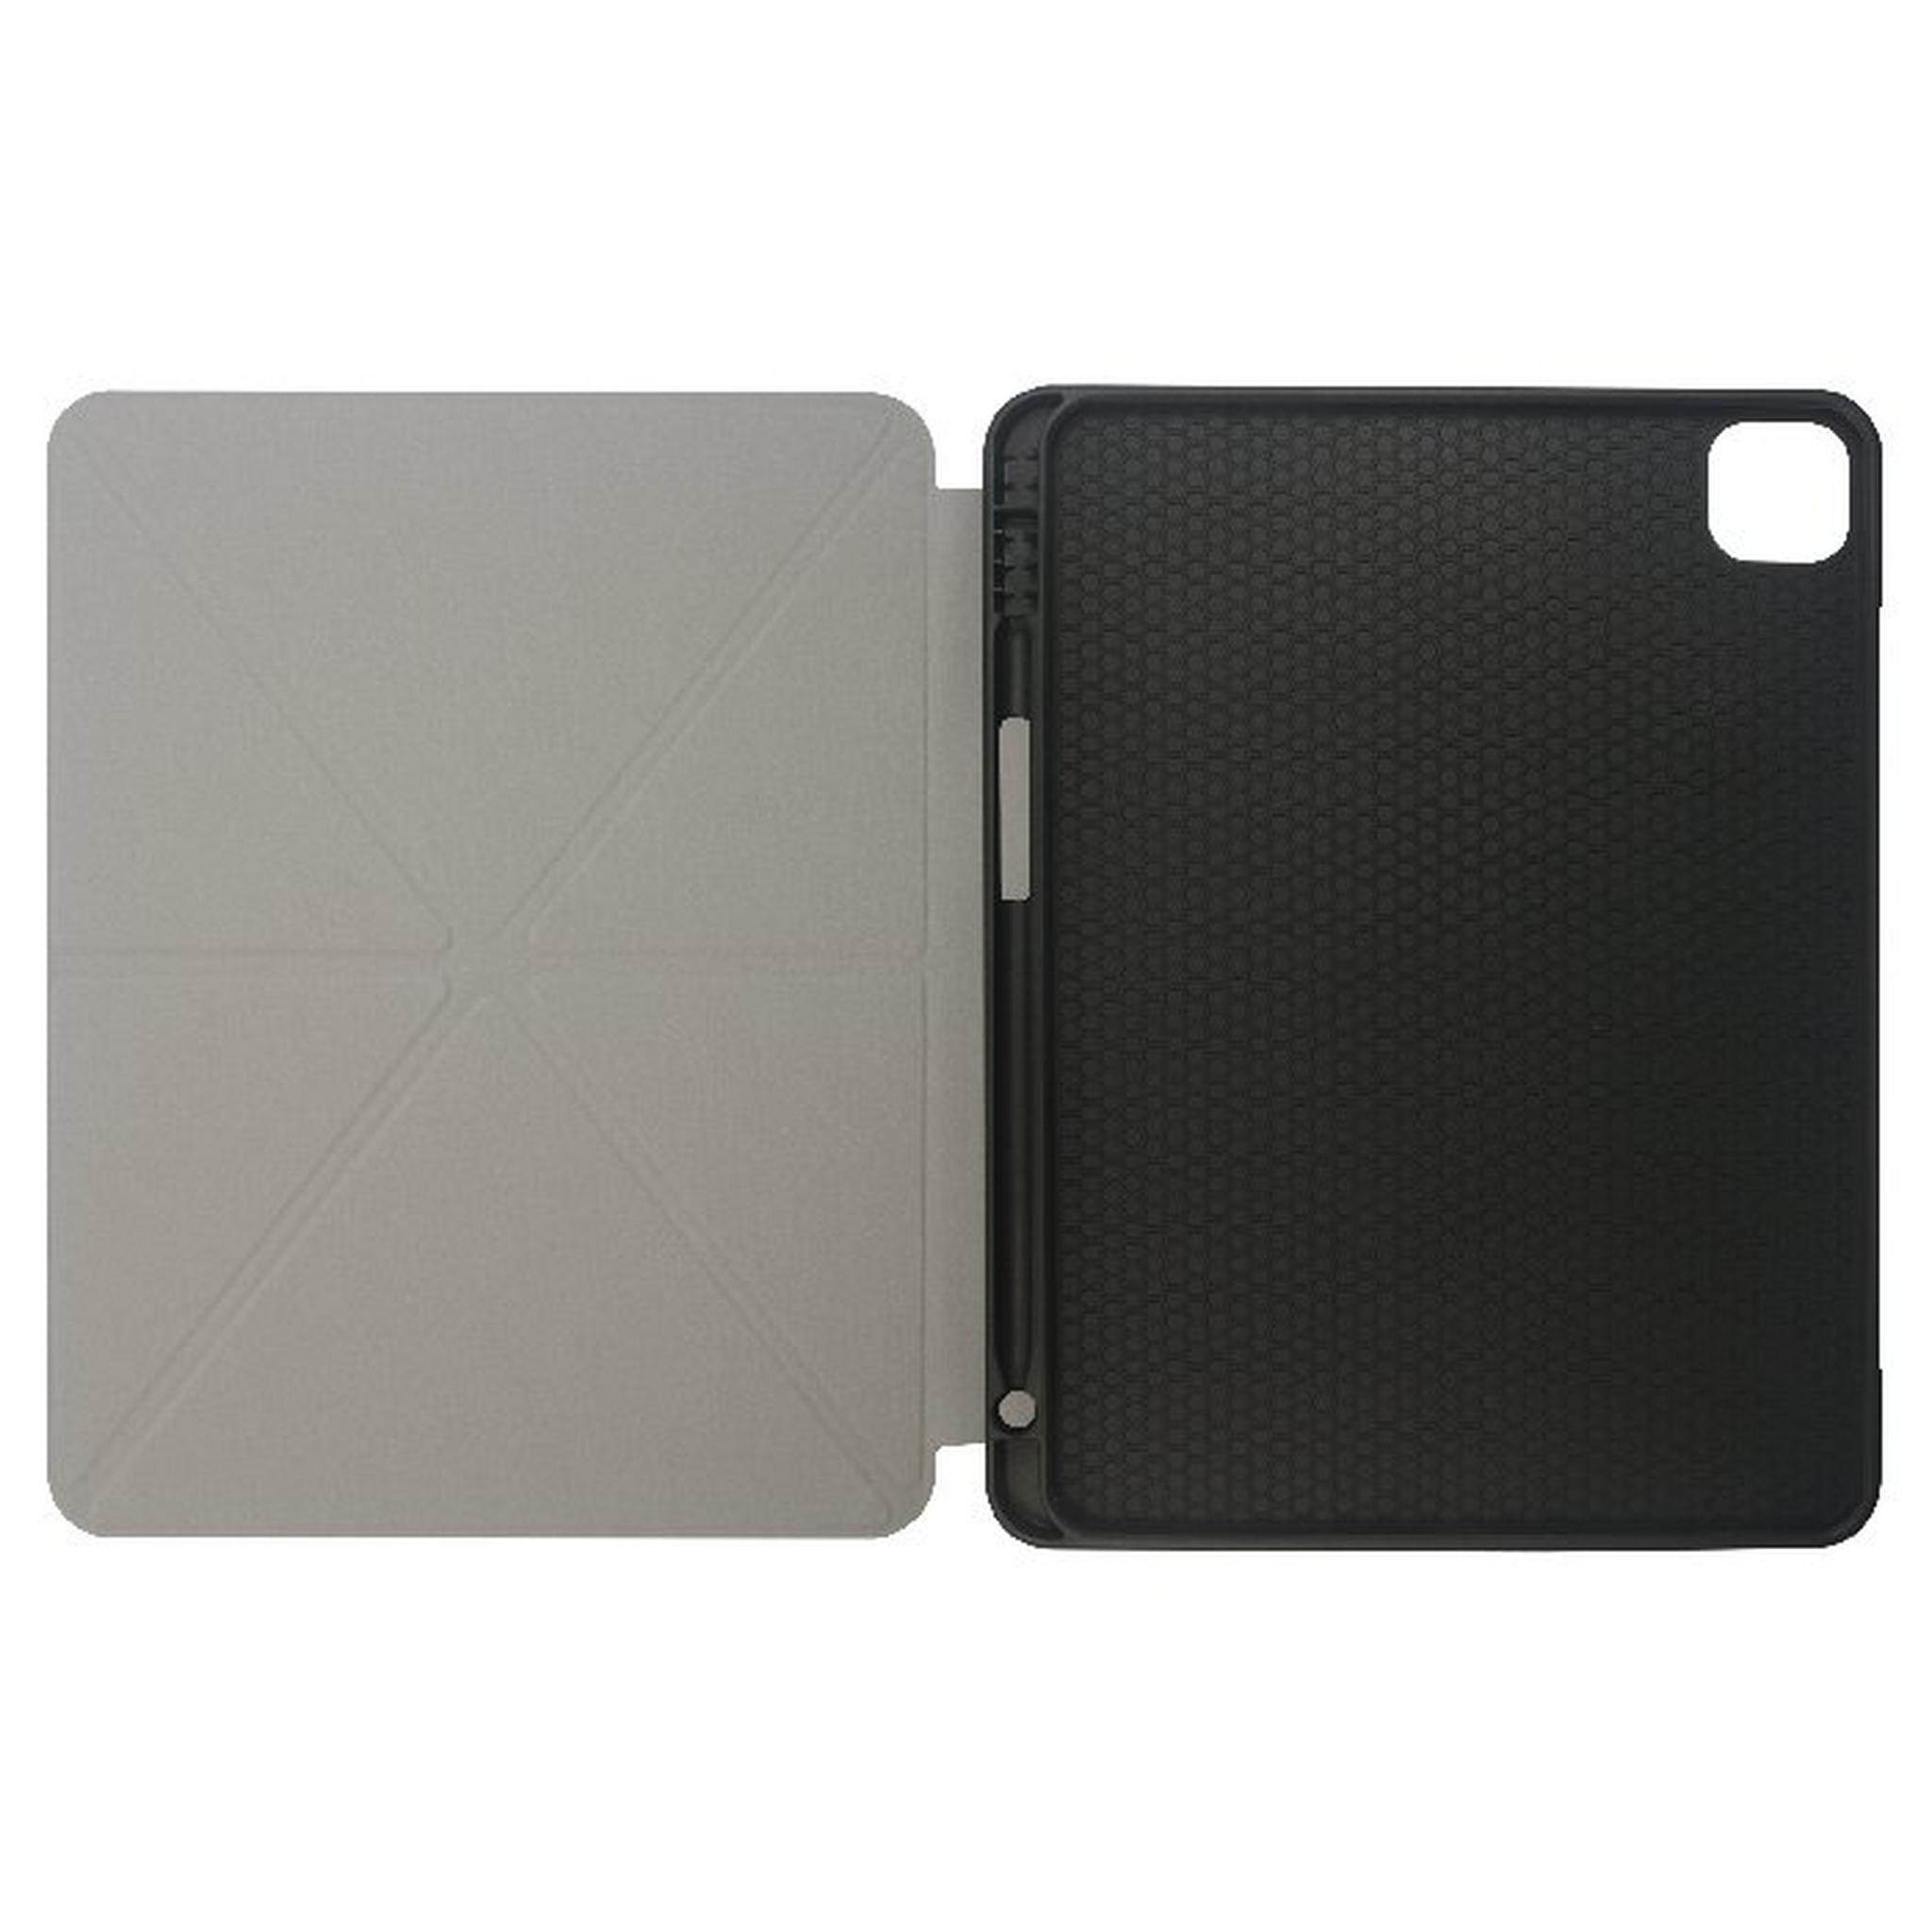 EQ Mebric Case For iPad Pro 11 inch - Grey